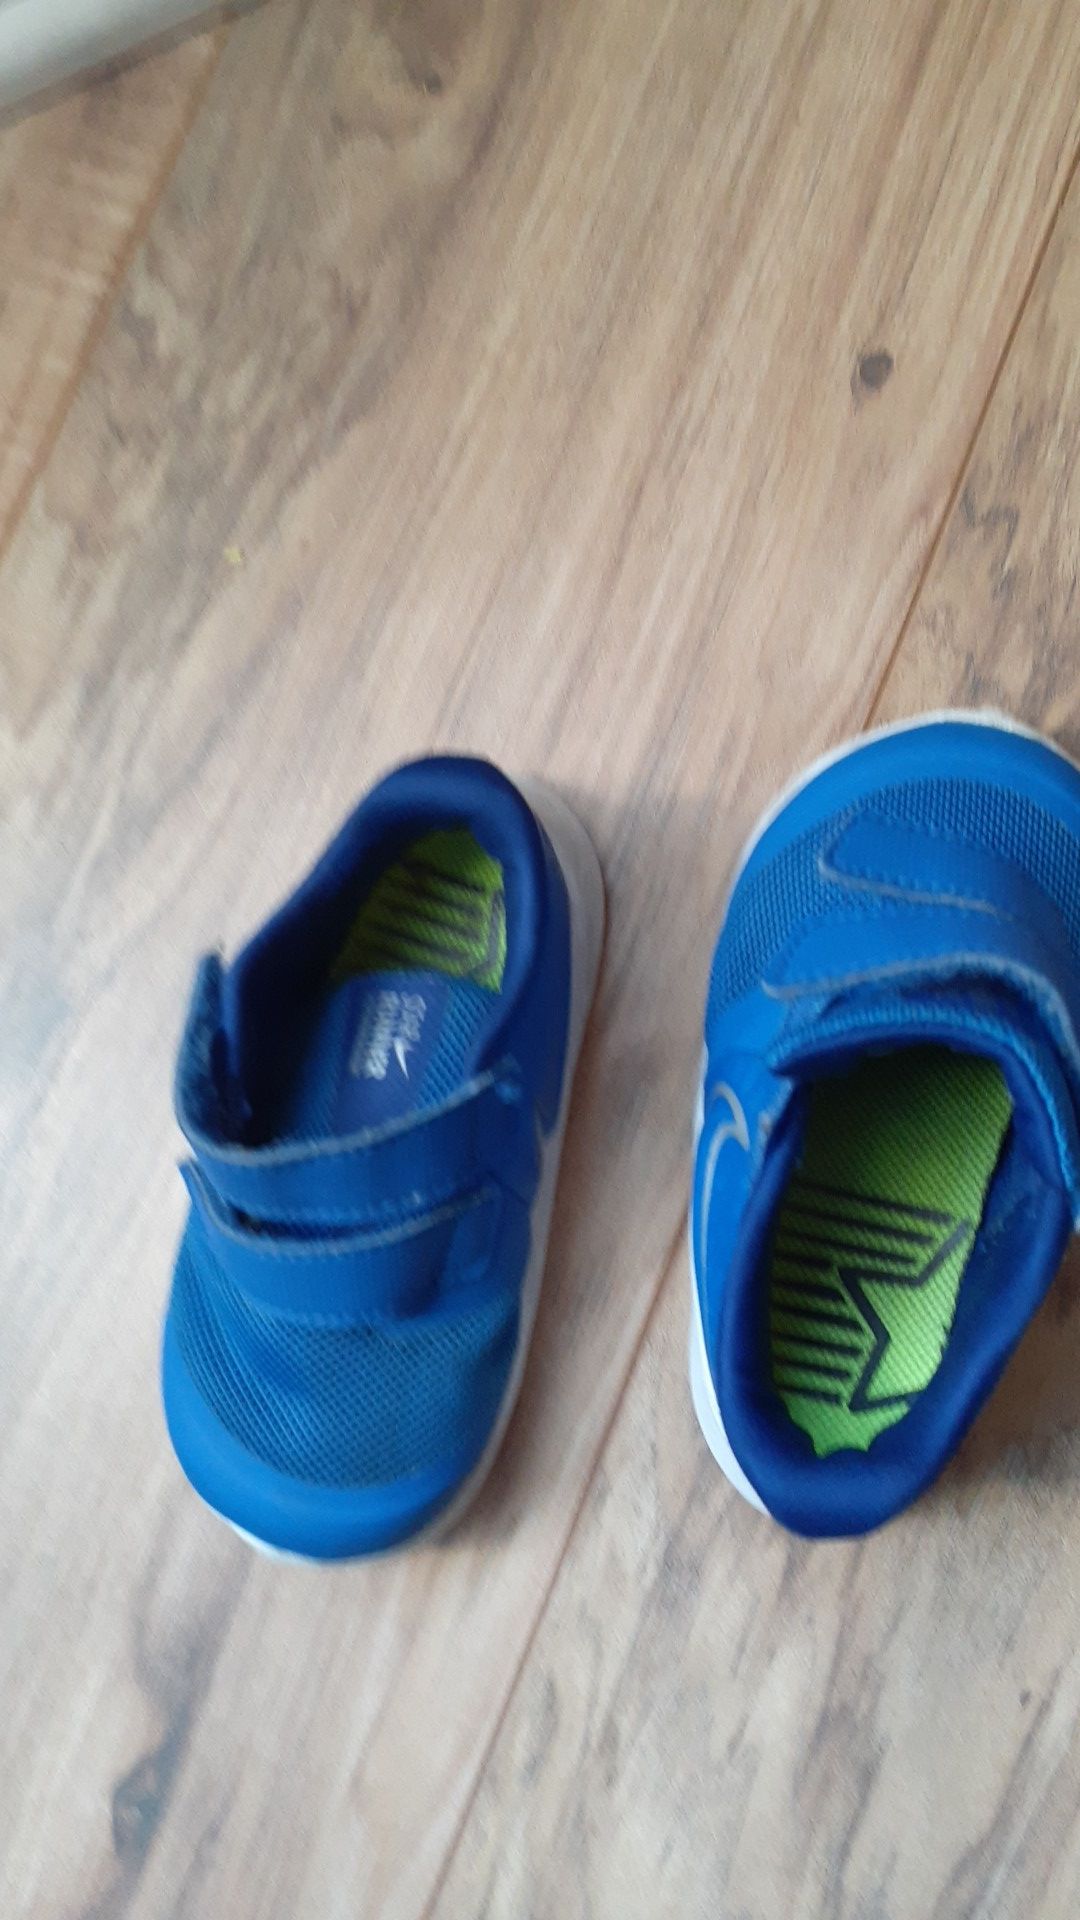 Free nike shoes toddler size 5c